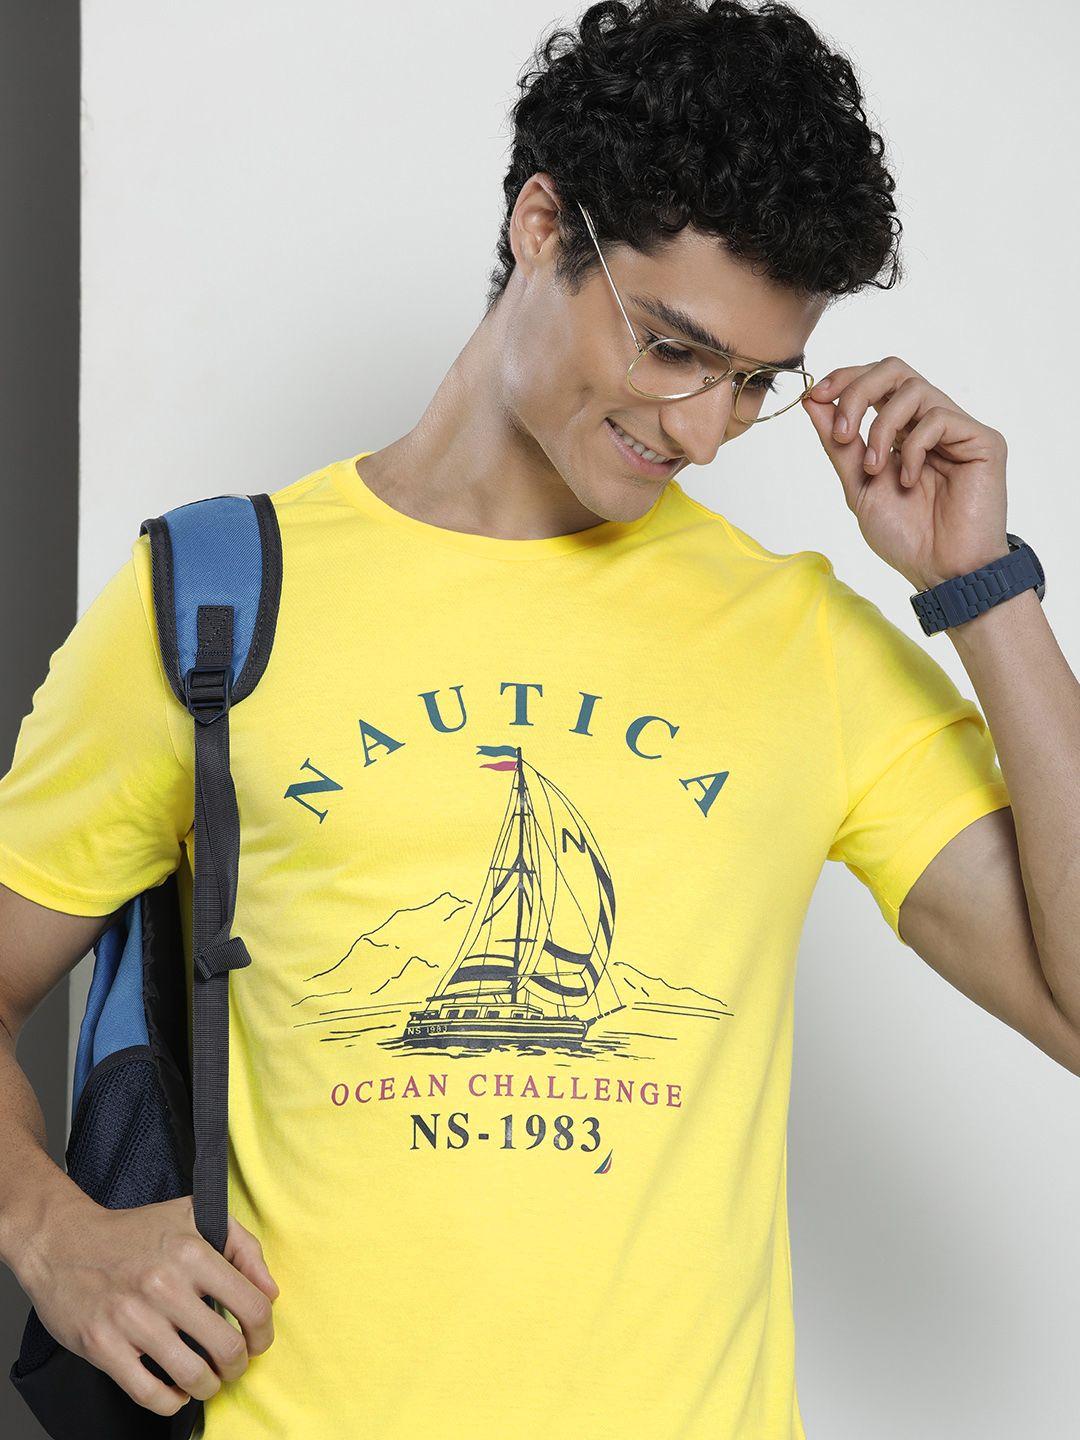 nautica men brand logo printed pure cotton t-shirt